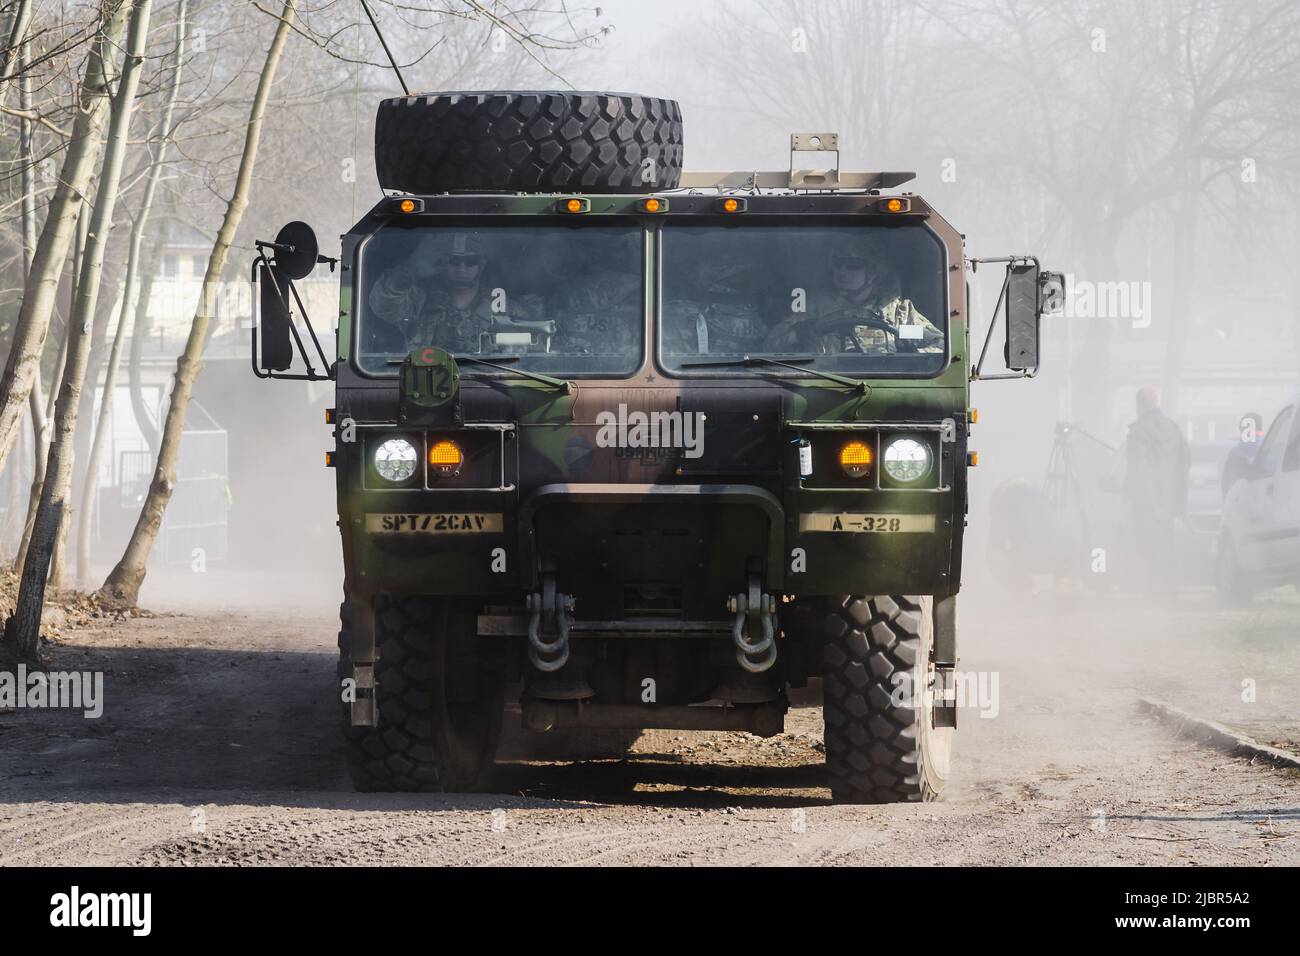 Lublin, Poland - March 25, 2015: United States Army Oshkosh Logistics Vehicle System passing city streets Stock Photo